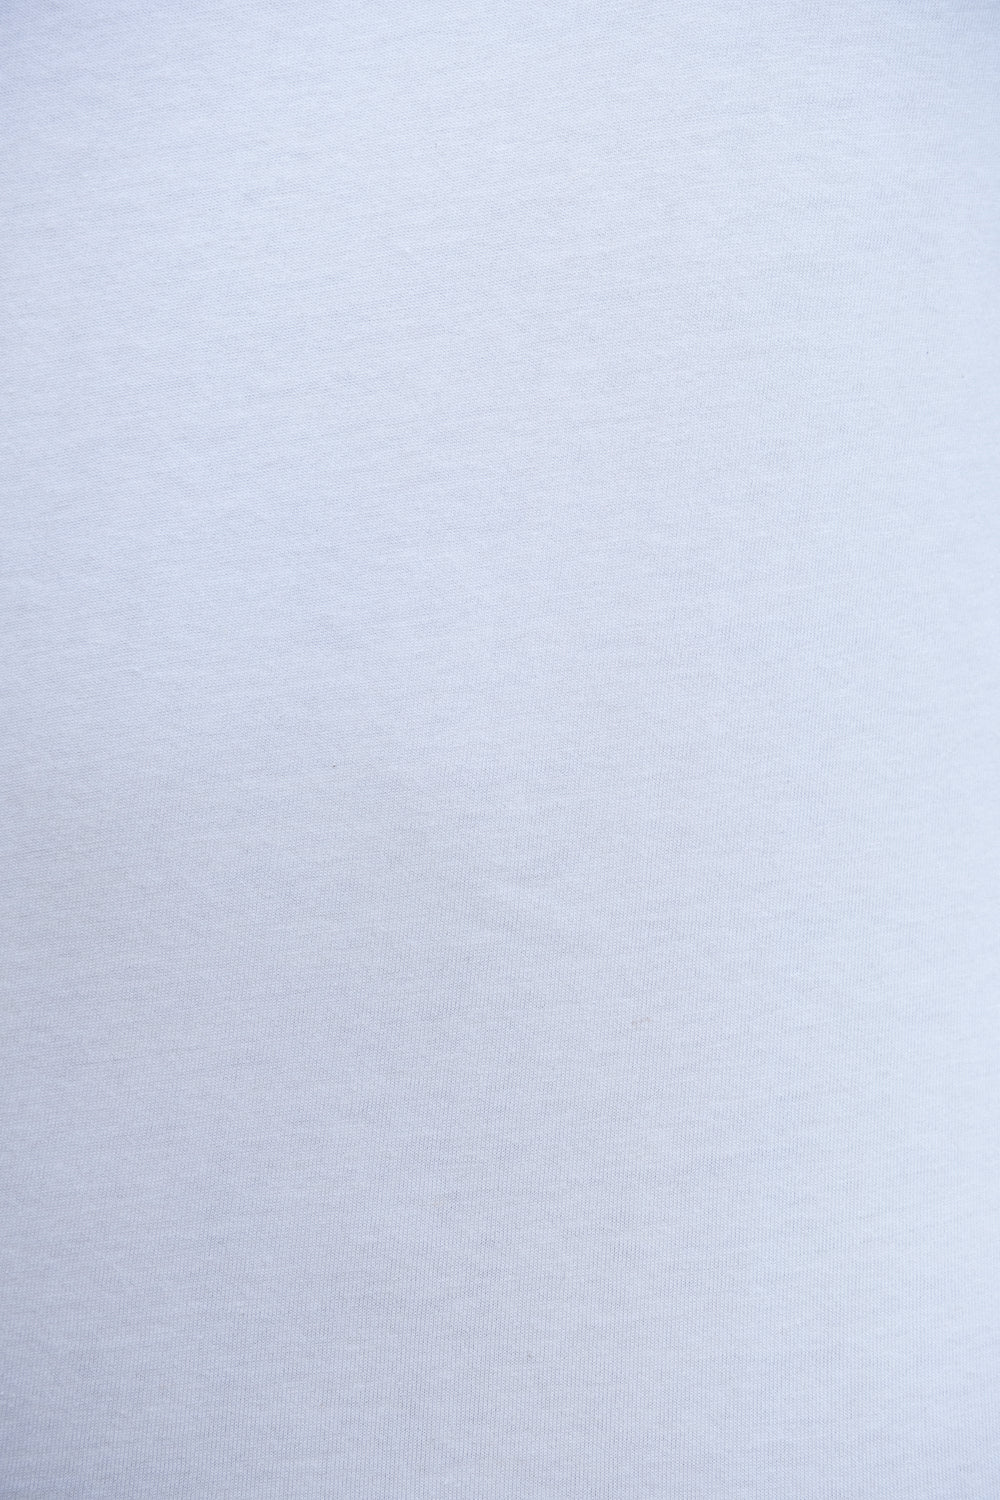 MIA Moda Regenerativa Camisetas Camiseta Esencial mujer manga larga - blanco y natural